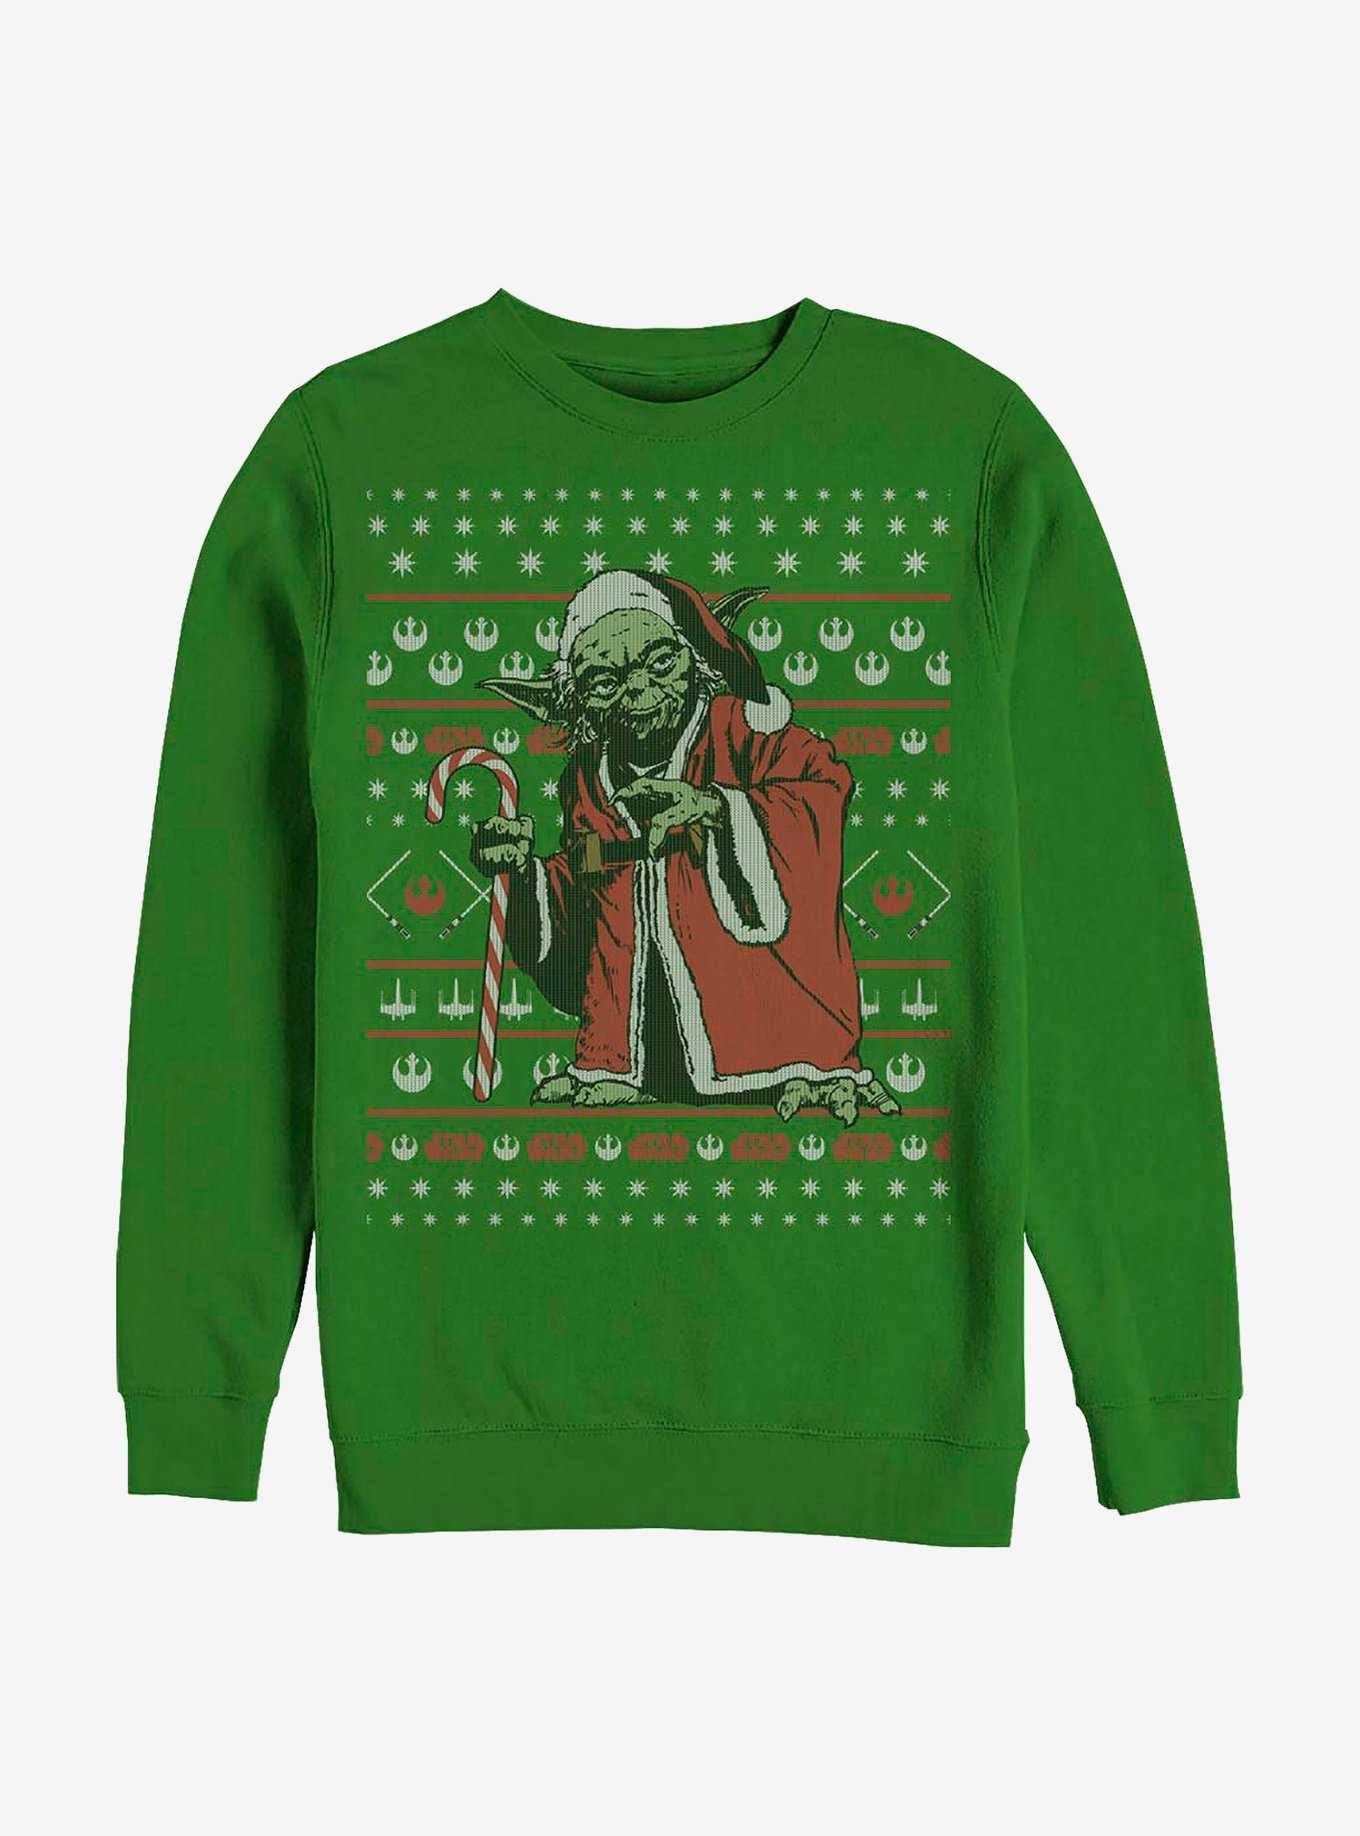 Star Wars Santa Yoda Crew Sweatshirt, , hi-res